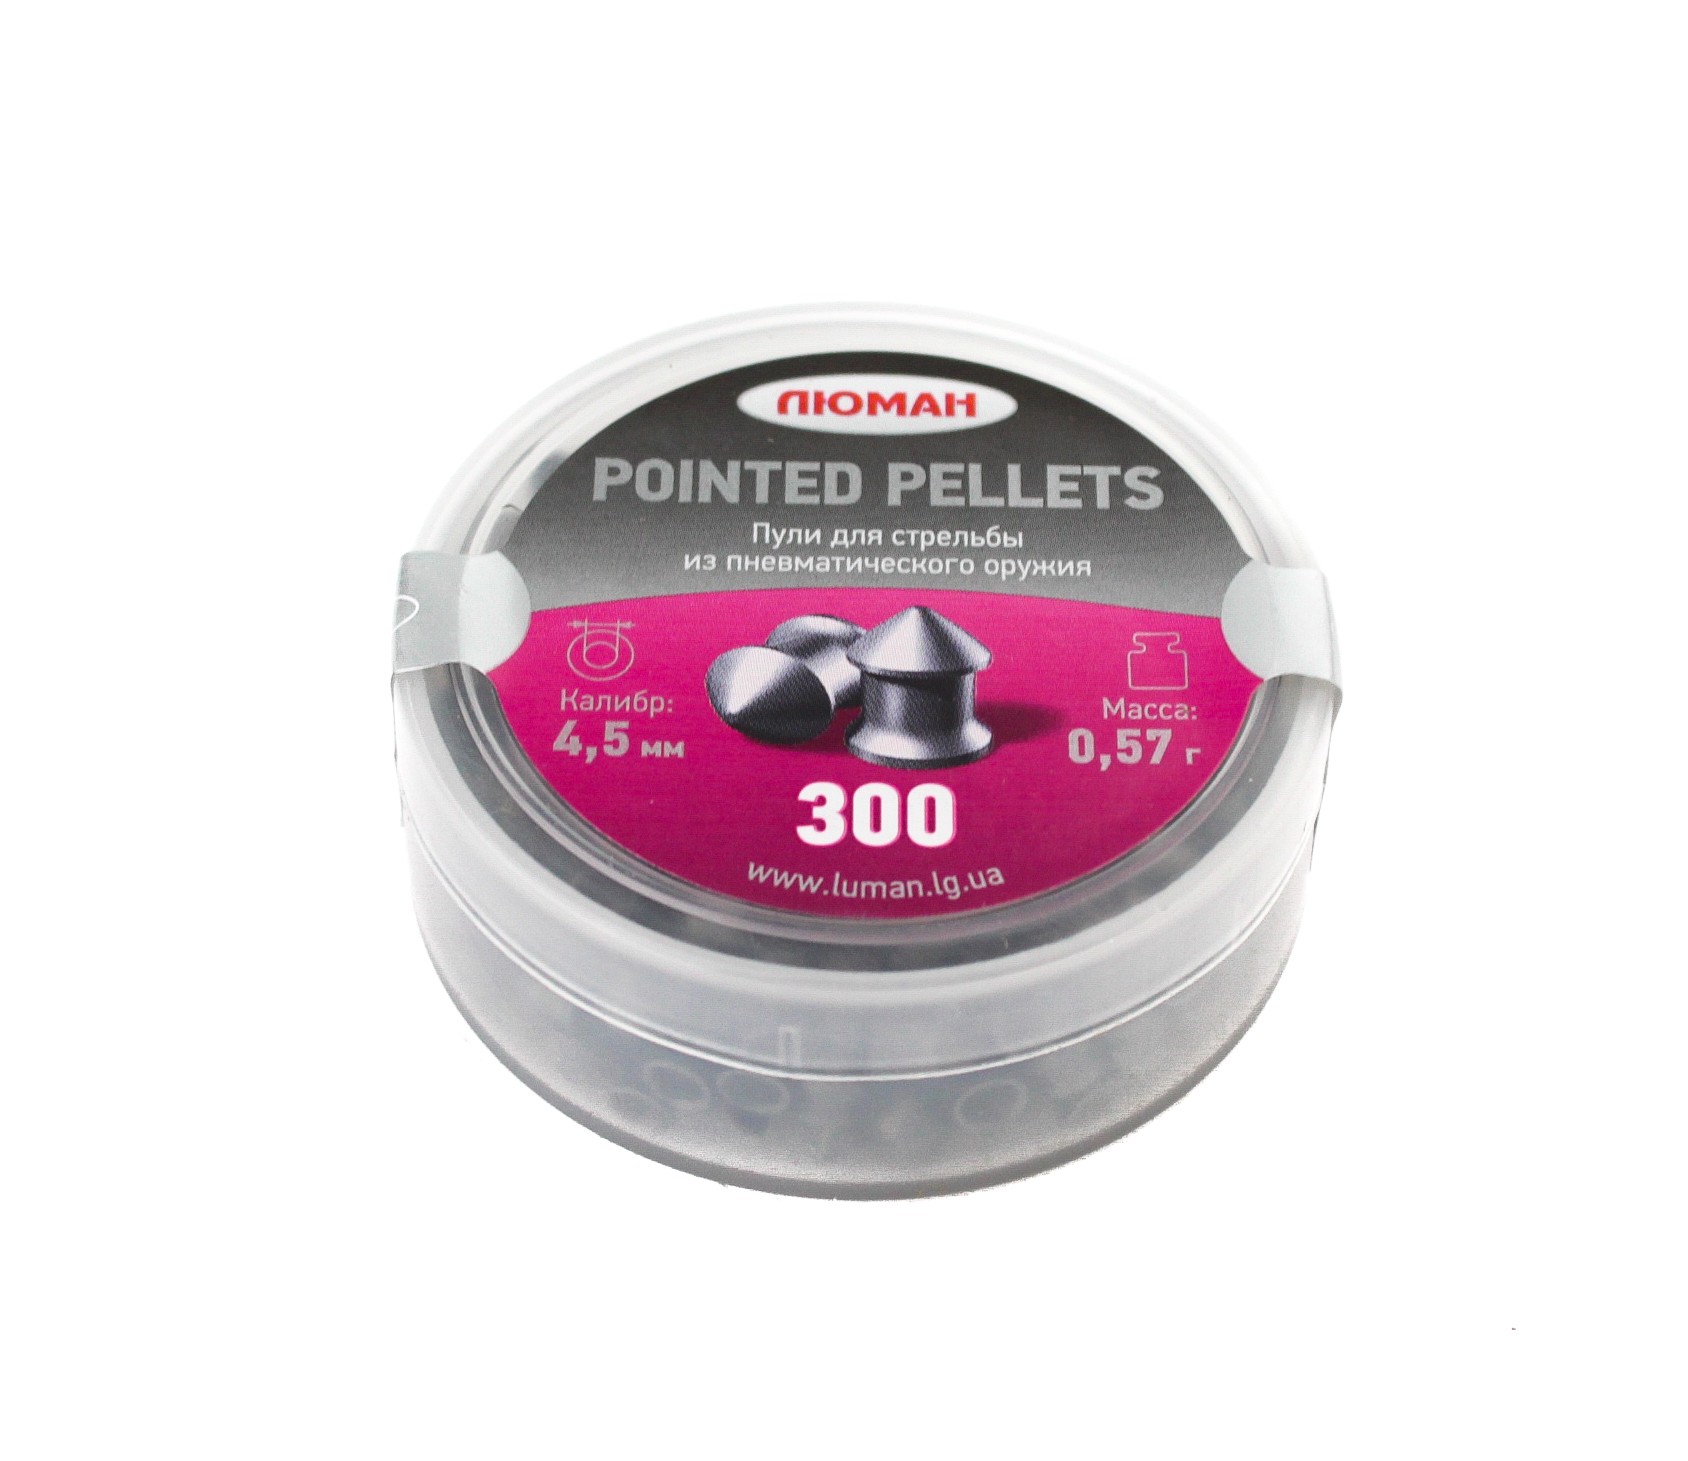 Пульки Люман Pointed pellets остроголовые 0,57 гр 4,5мм 300 шт - фото 1